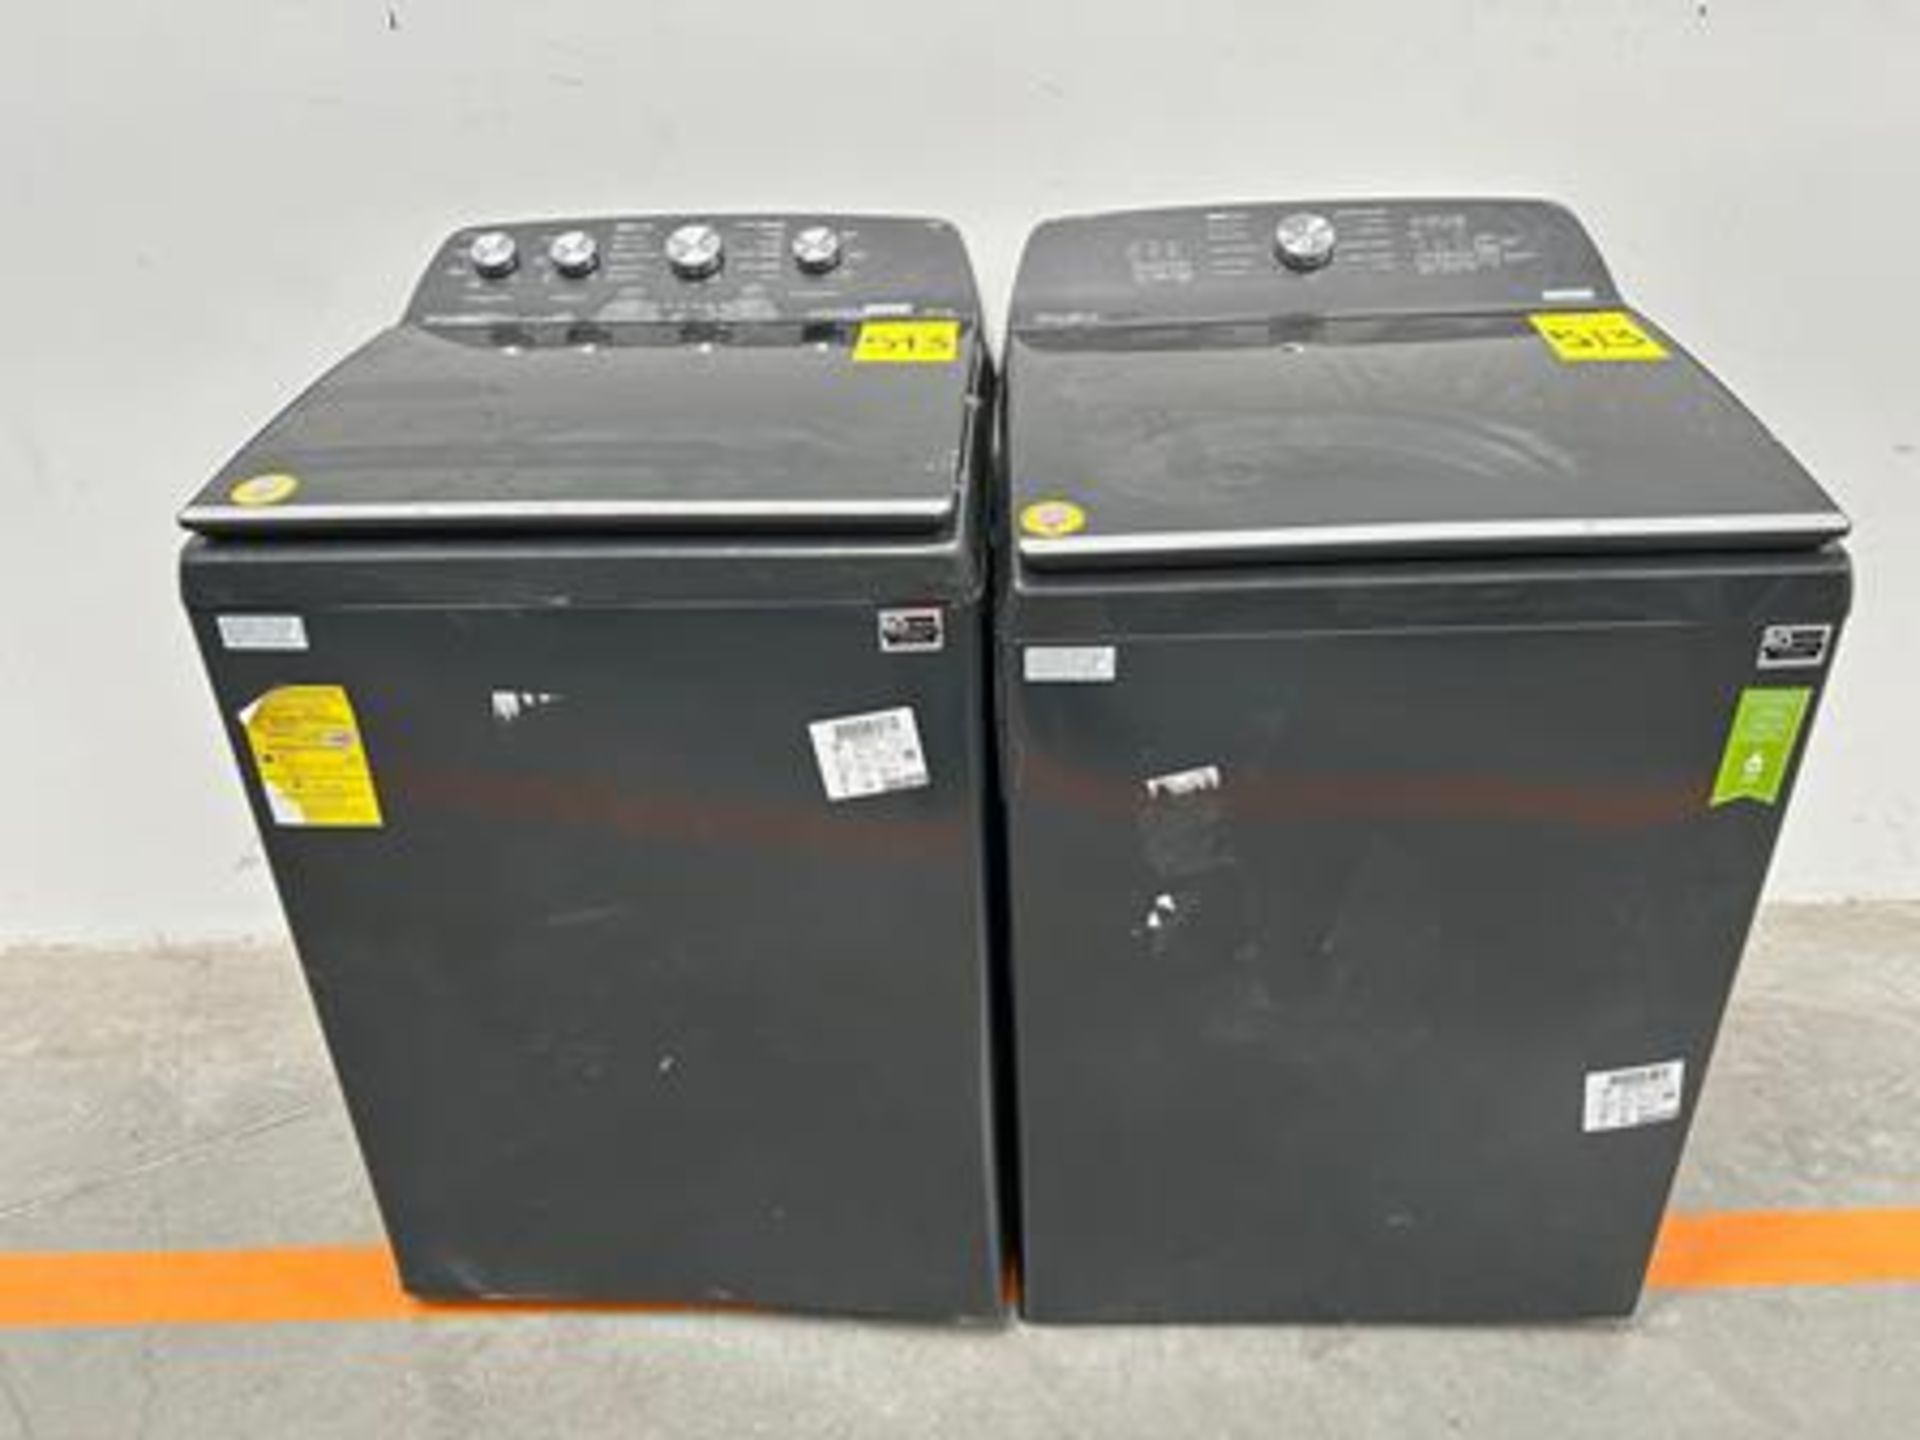 Lote de 2 lavadoras, Contiene: 1 lavadora de 20 Kg Marca WHIRLPOOL, Modelo 8MWTW2023WPM0, Serie 783